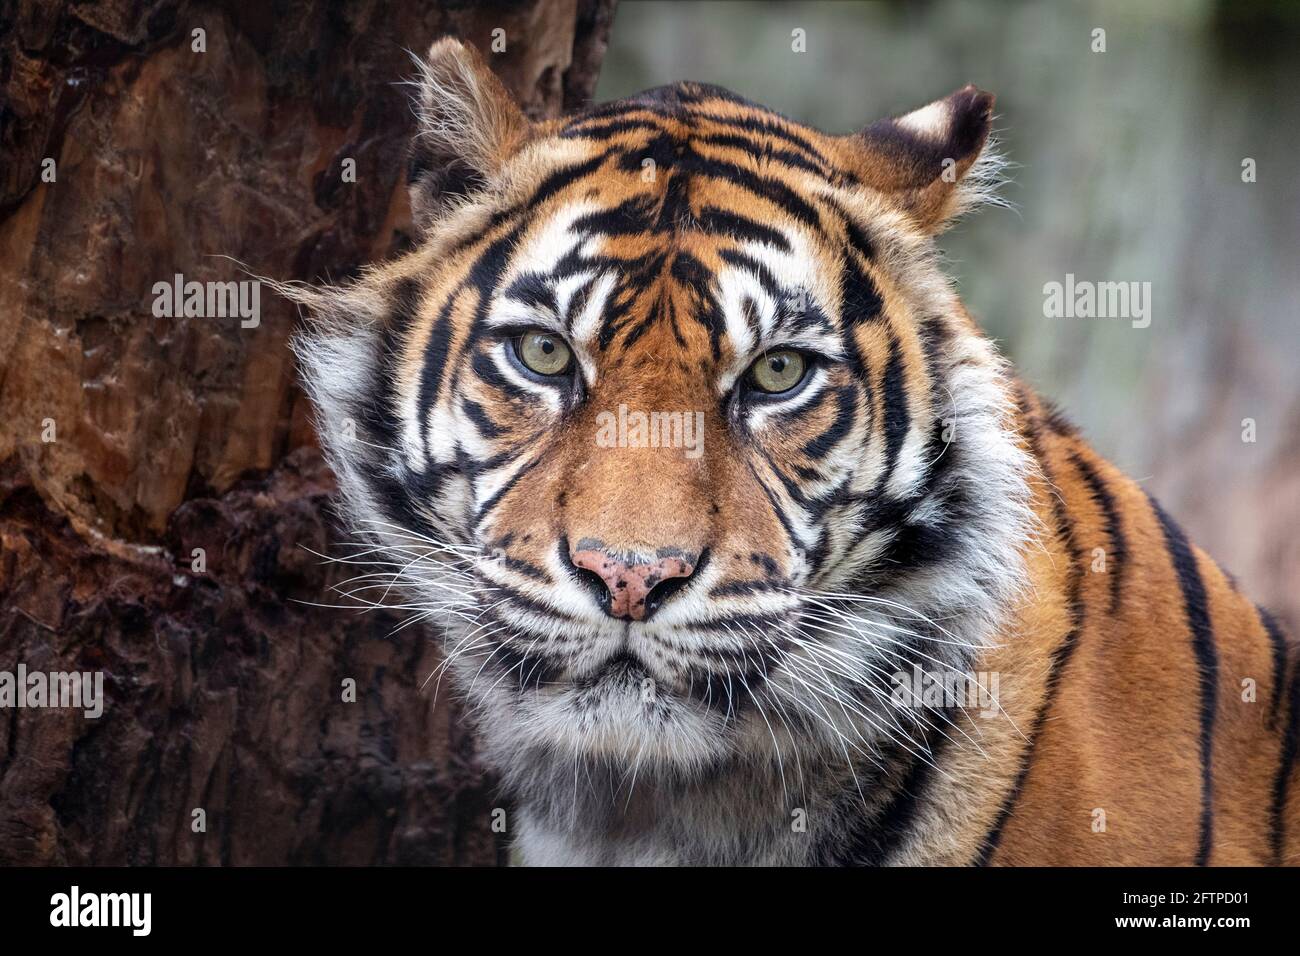 Female Sumatran tiger next to tree, staring at camera Stock Photo